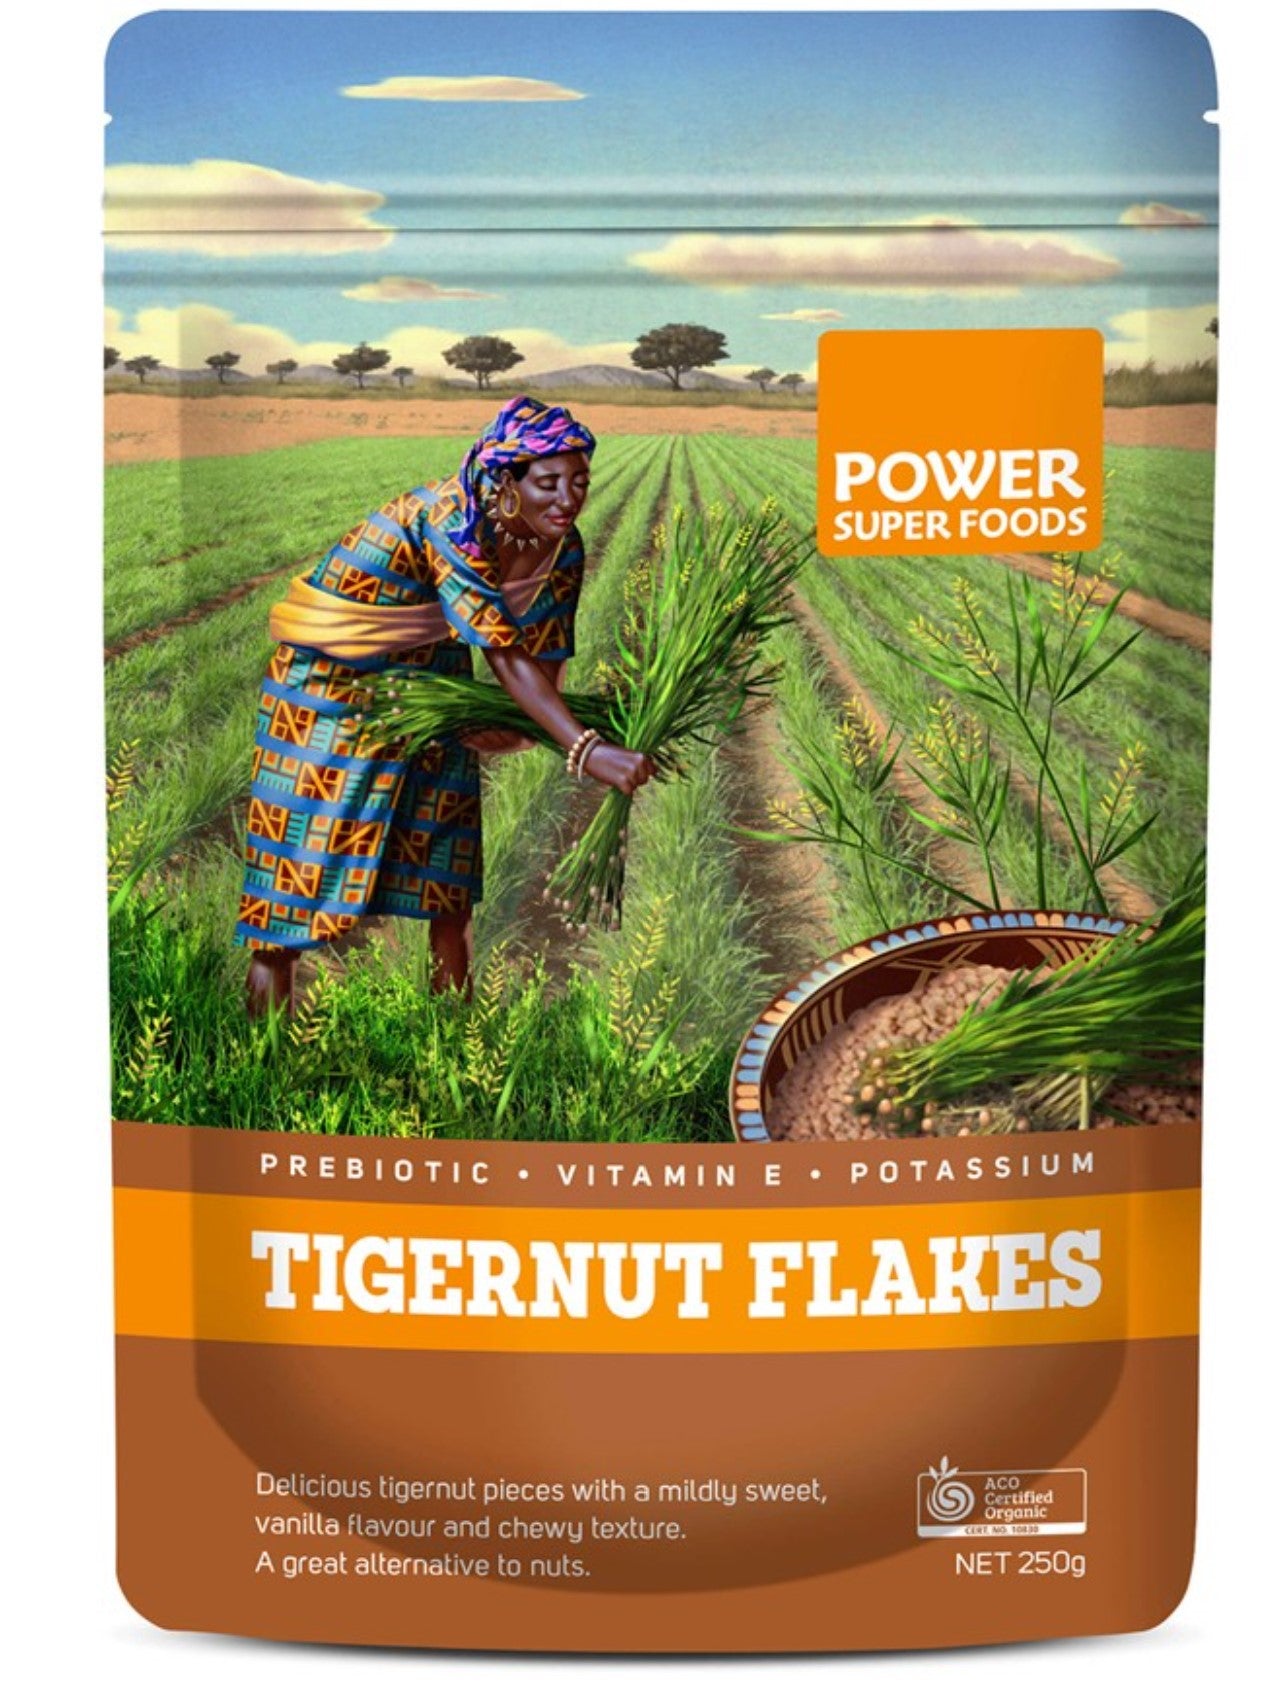 power super foods tigernut flakes